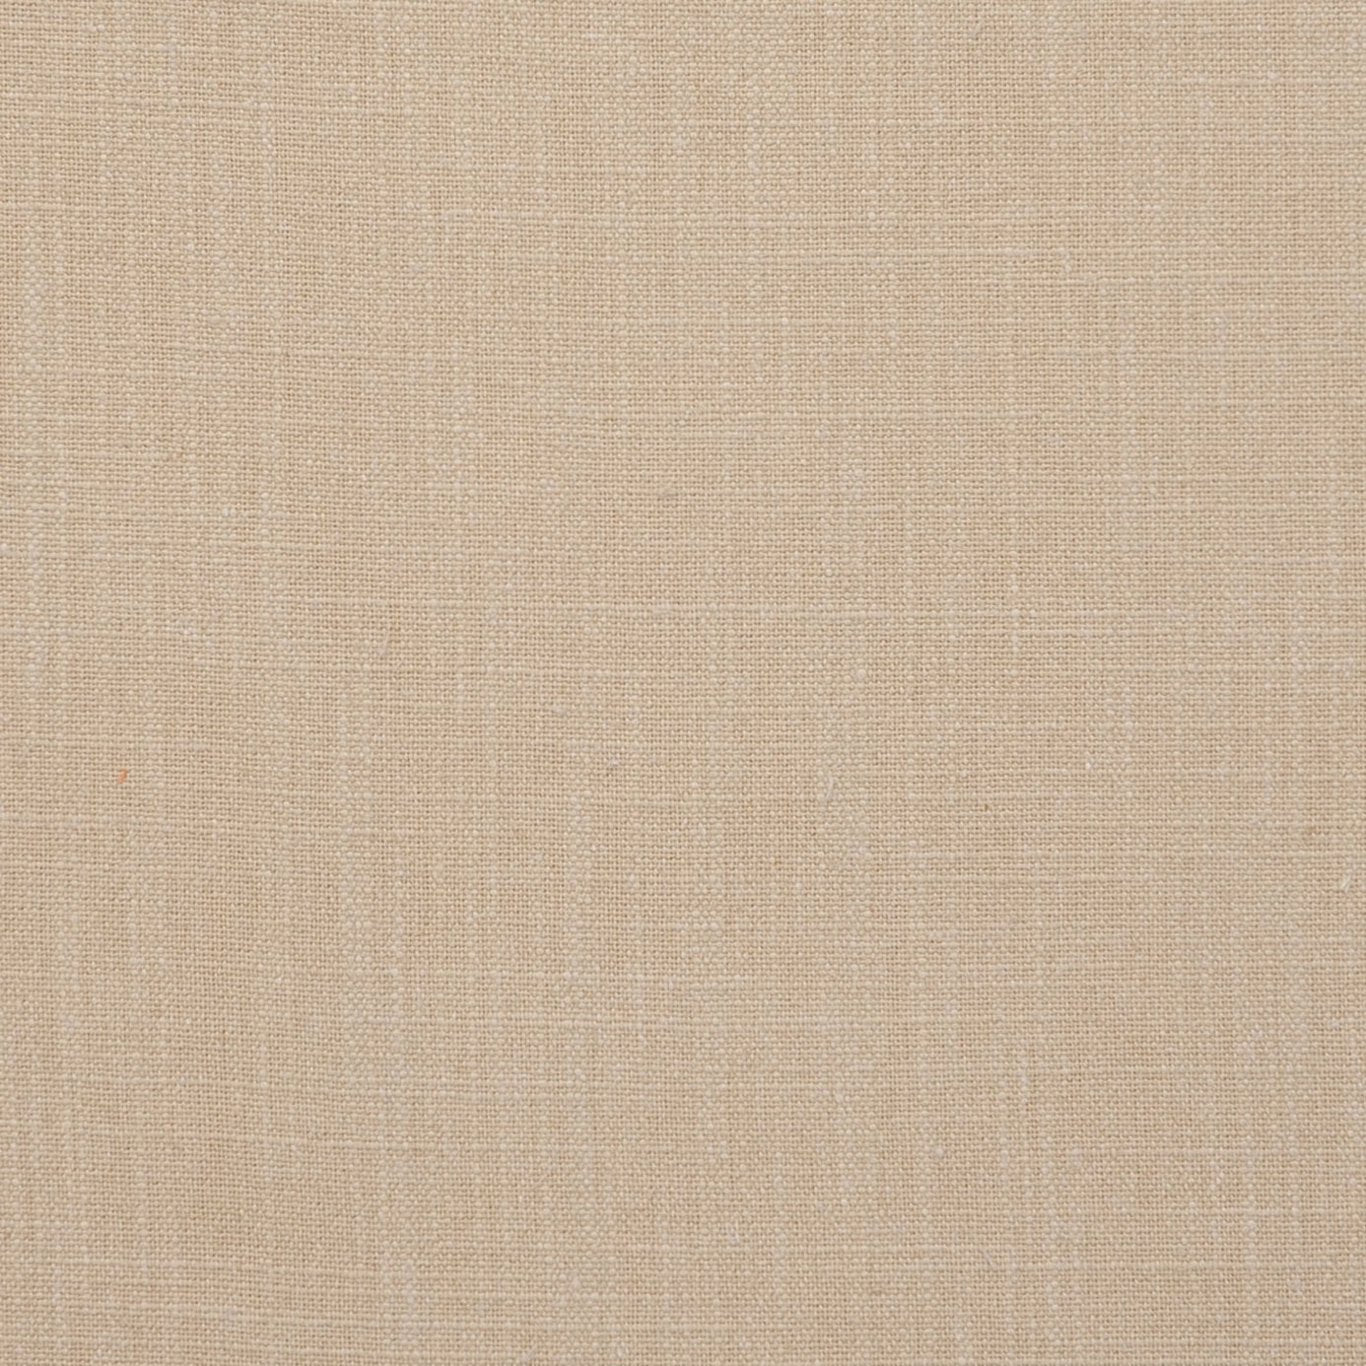 Easton Fabric by Clarke & Clarke - F0736/10 - Sand